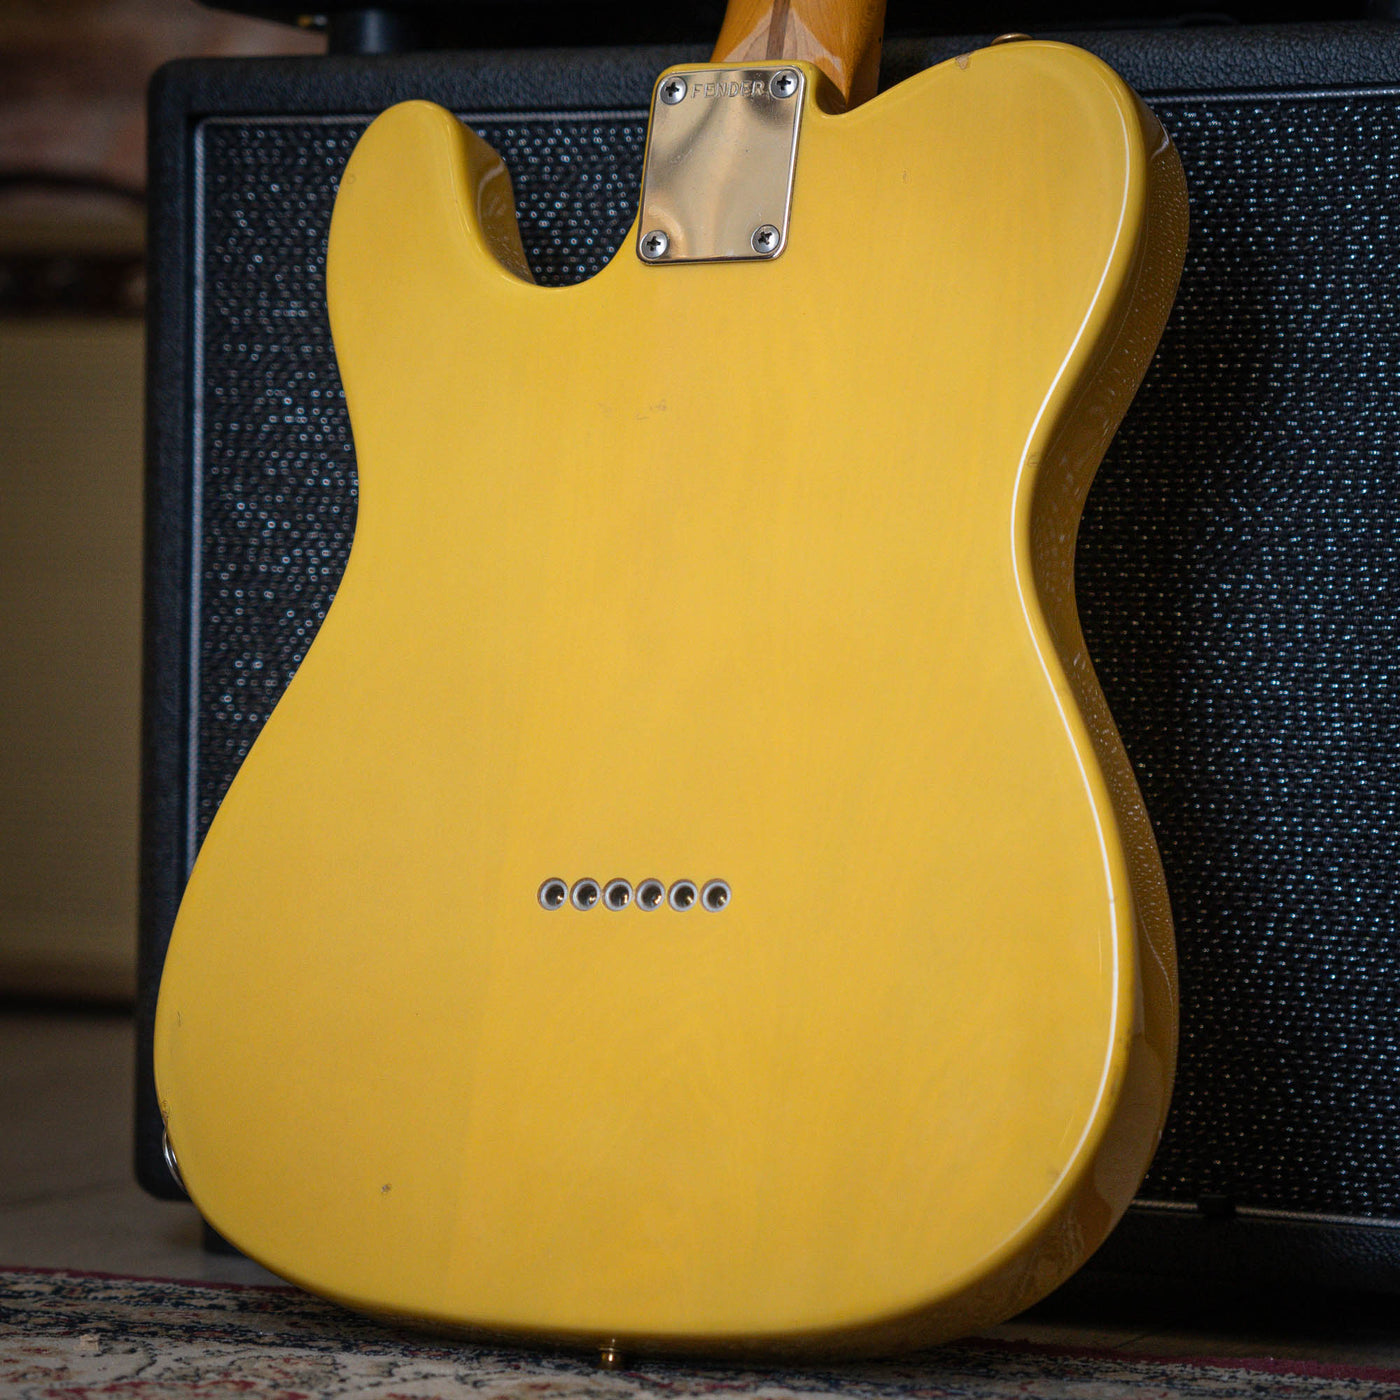 Fender Telecaster RI'52 Butterscotch Blonde MIJ '89